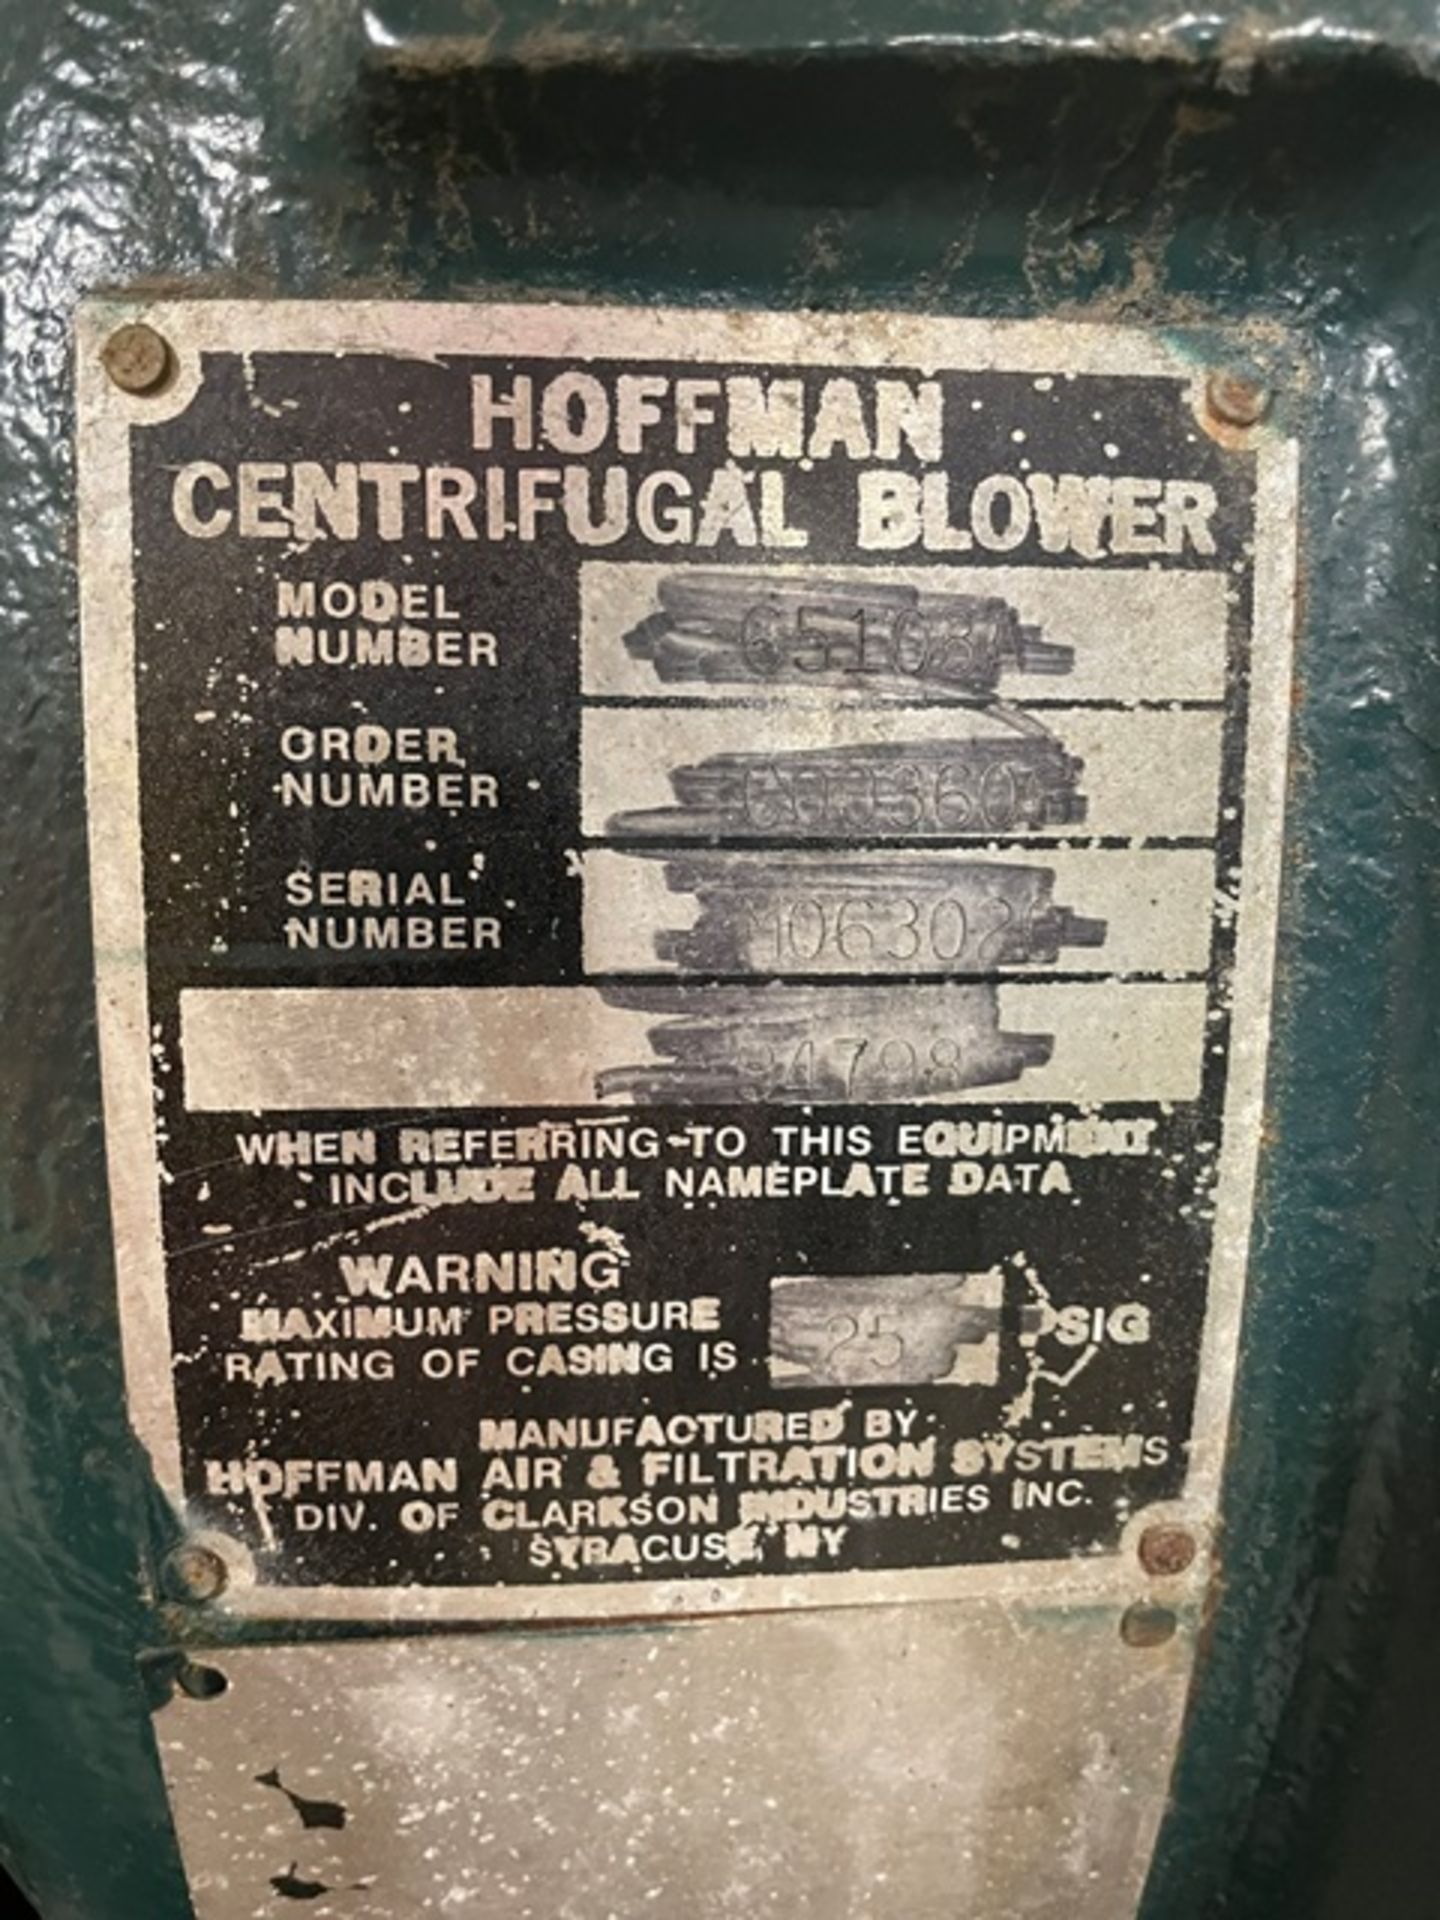 2019 Hoffman Model 65108A Centrifugal Blower w/Baldor 200 HP Motor, Rigging & Loading Fee: $1400 - Image 3 of 4